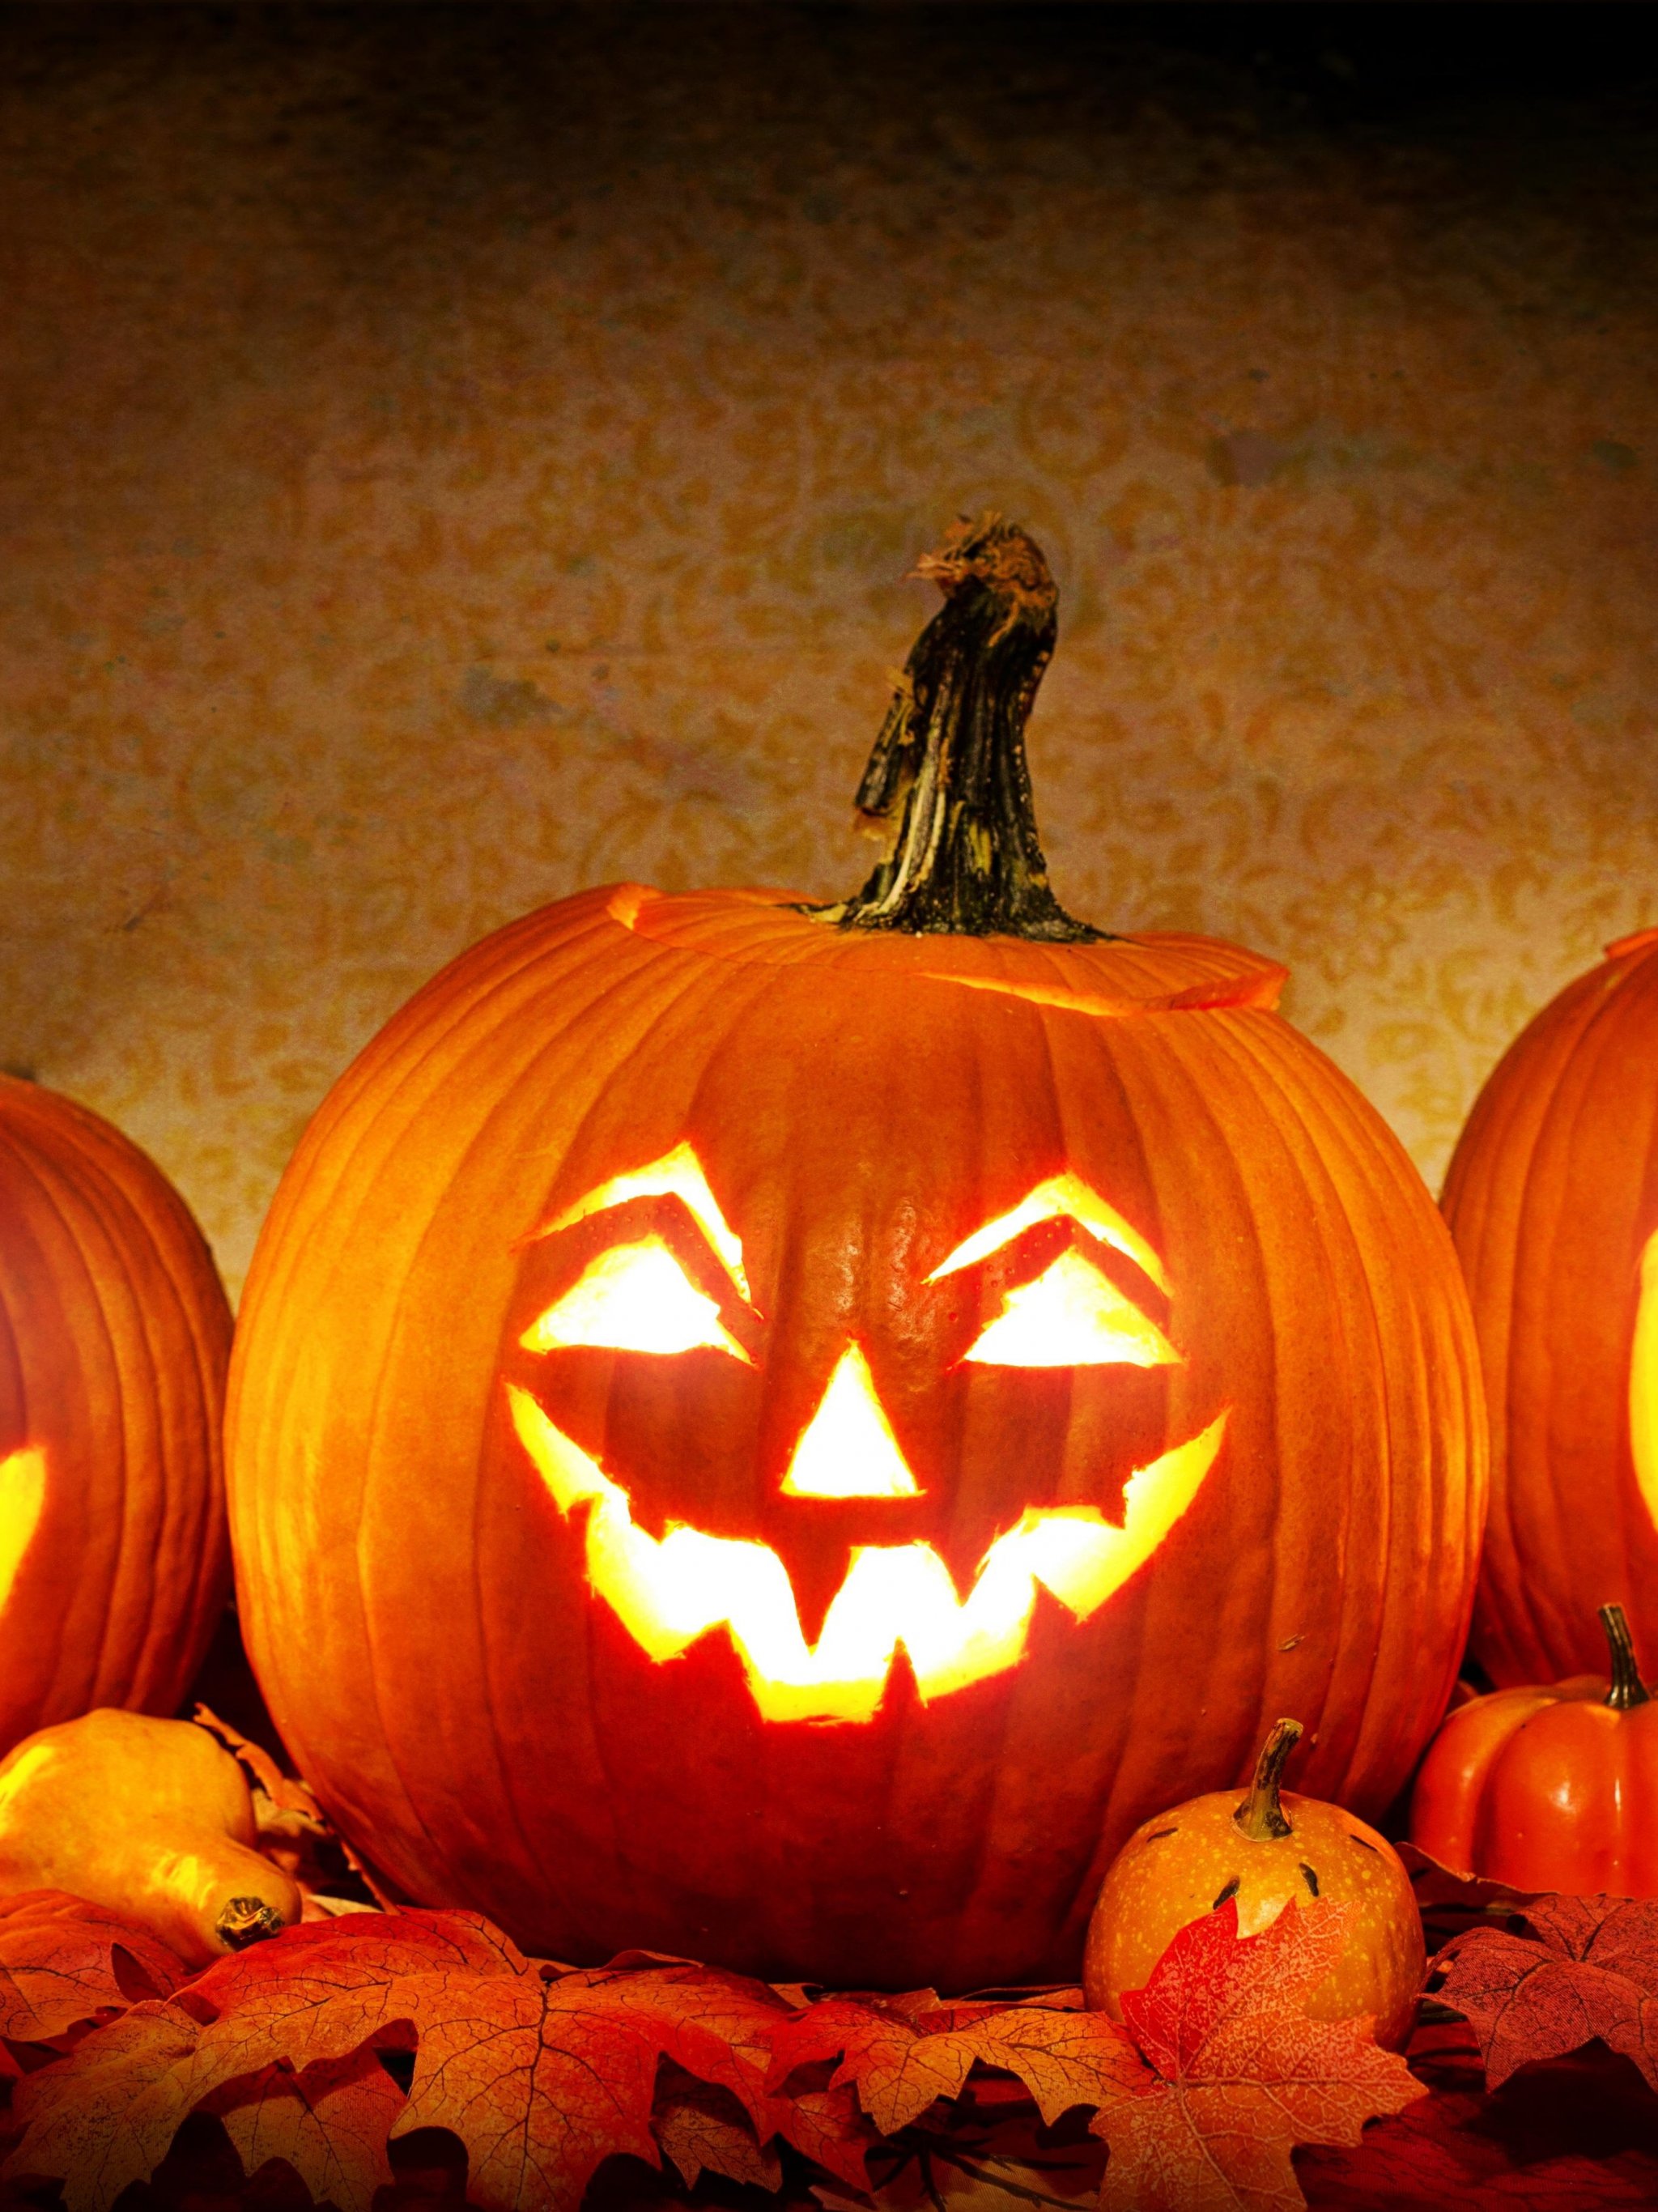 Jack o' Lantern Halloween Pumpkin Wallpaper - iPhone, Android & Desktop  Backgrounds